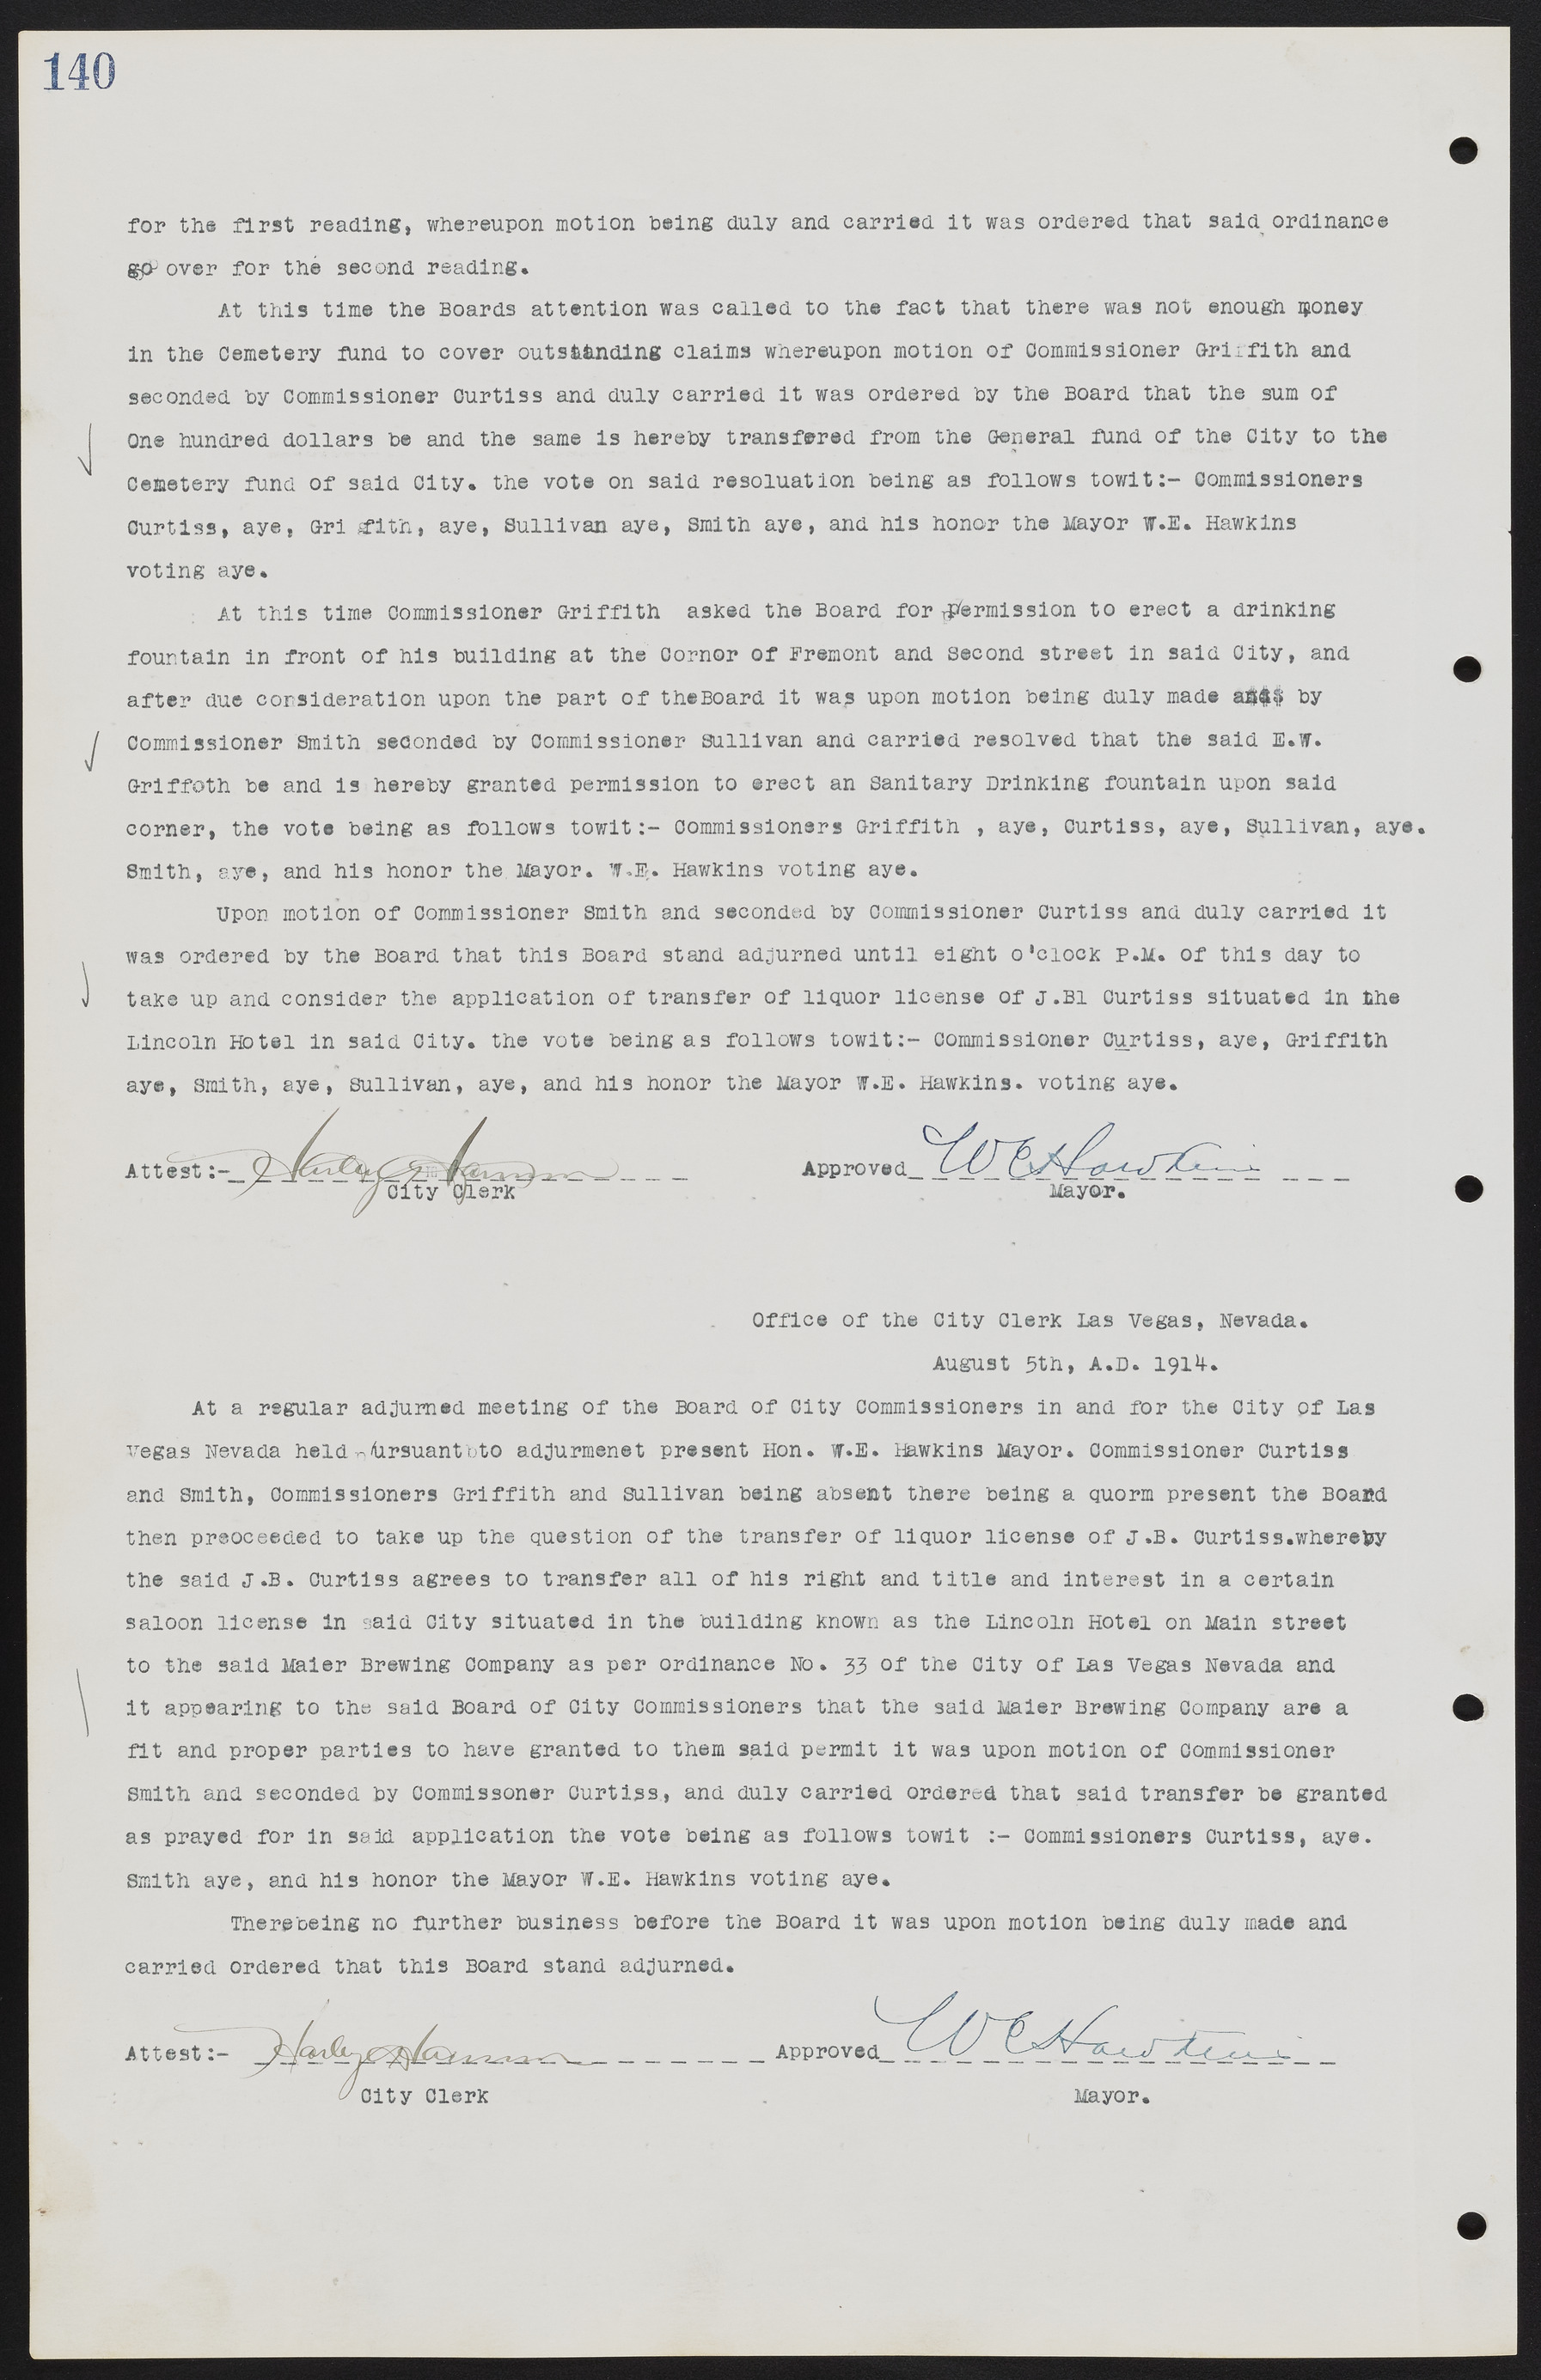 Las Vegas City Commission Minutes, June 22, 1911 to February 7, 1922, lvc000001-154